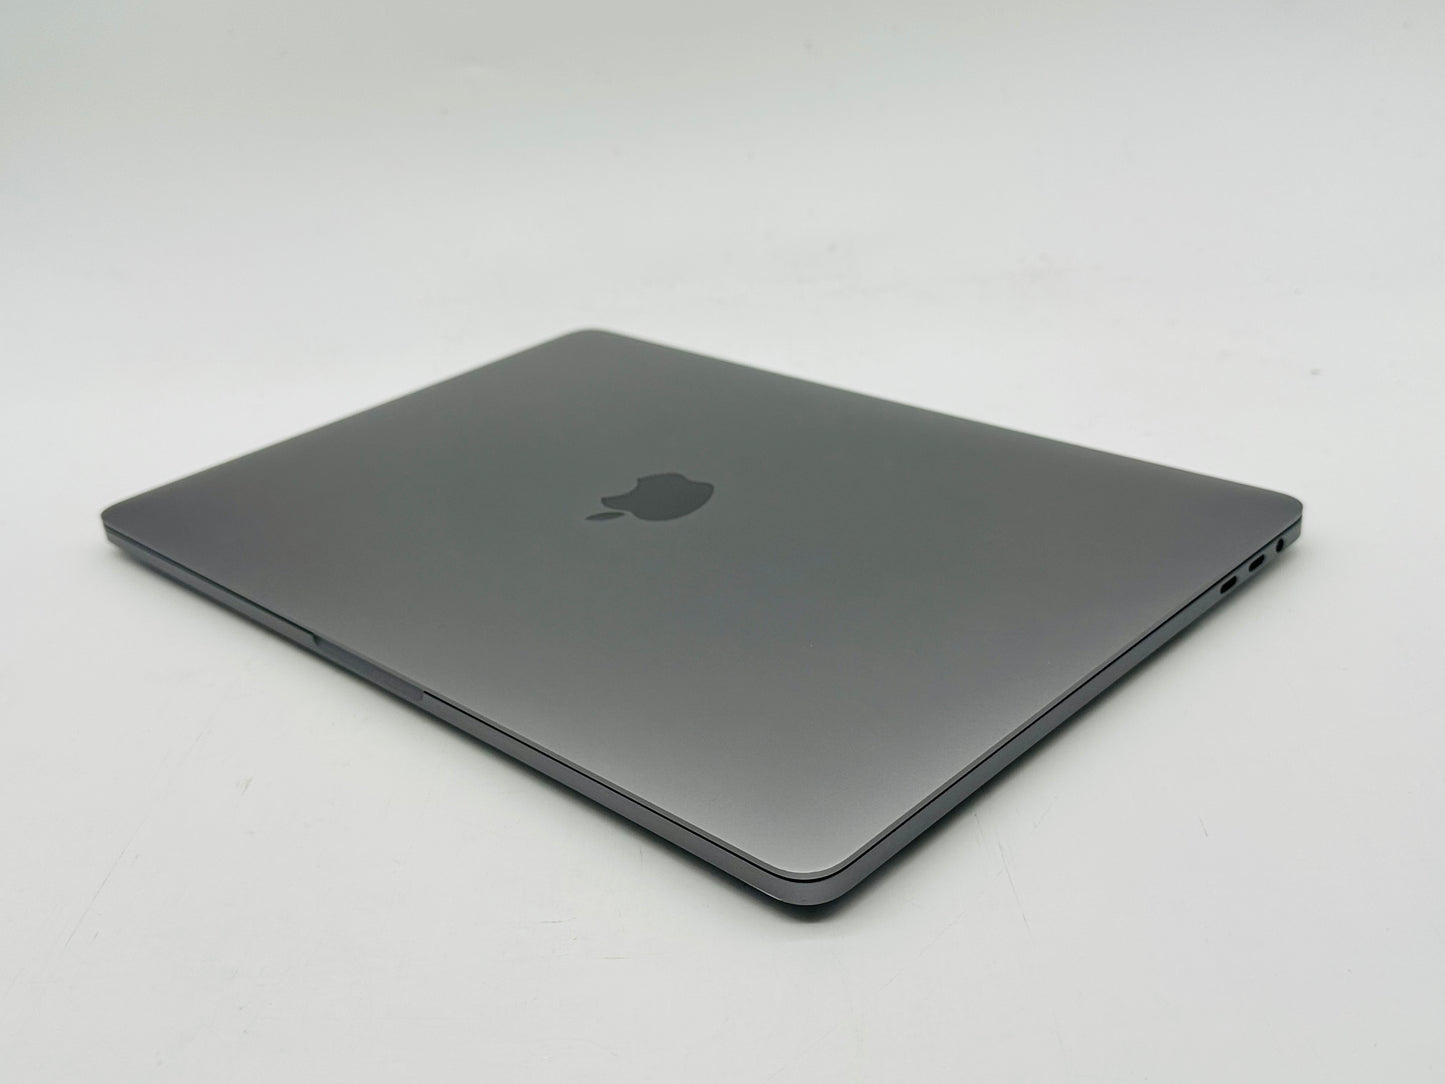 Apple 2020 MacBook Pro 13 in TB 2.0GHz Quad-Core i5 16GB RAM 512GB SSD IIPG 1536